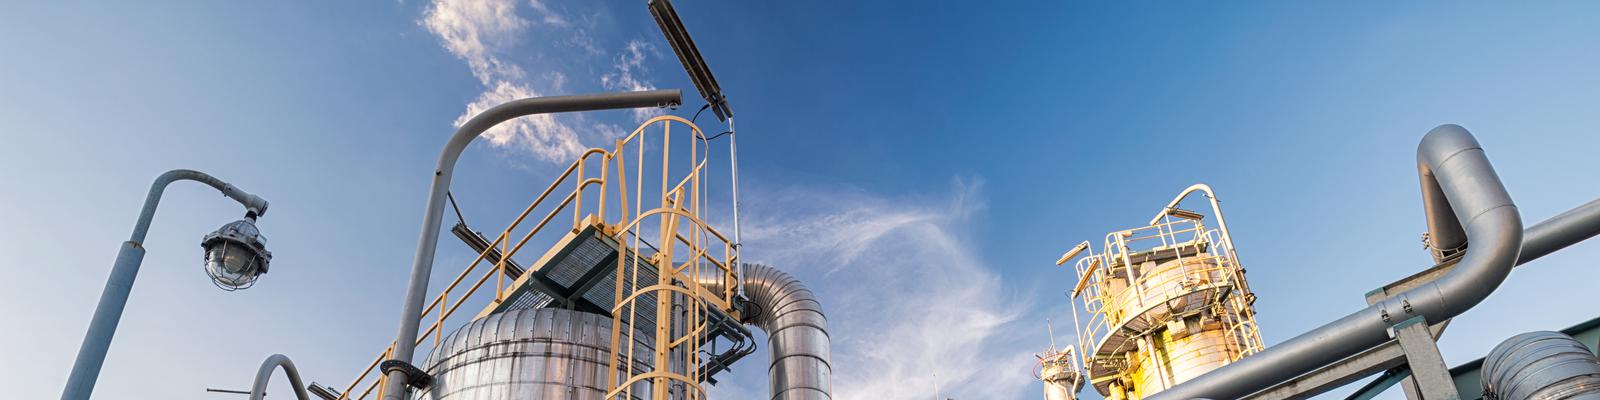 Molecular sieve dehydration system : Oil and gas Refinery